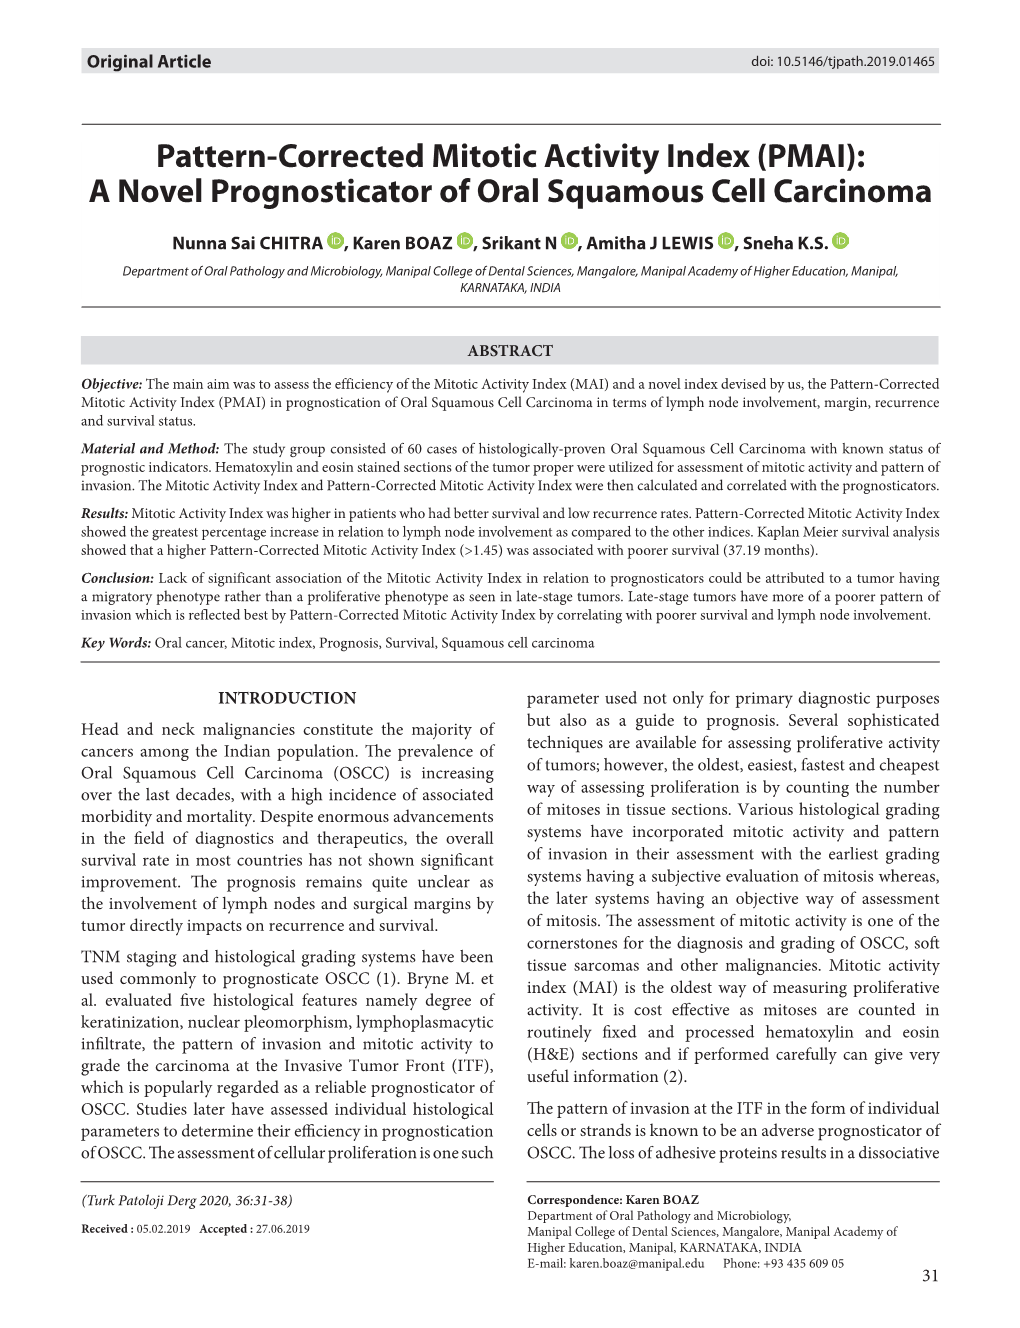 (PMAI): a Novel Prognosticator of Oral Squamous Cell Carcinoma